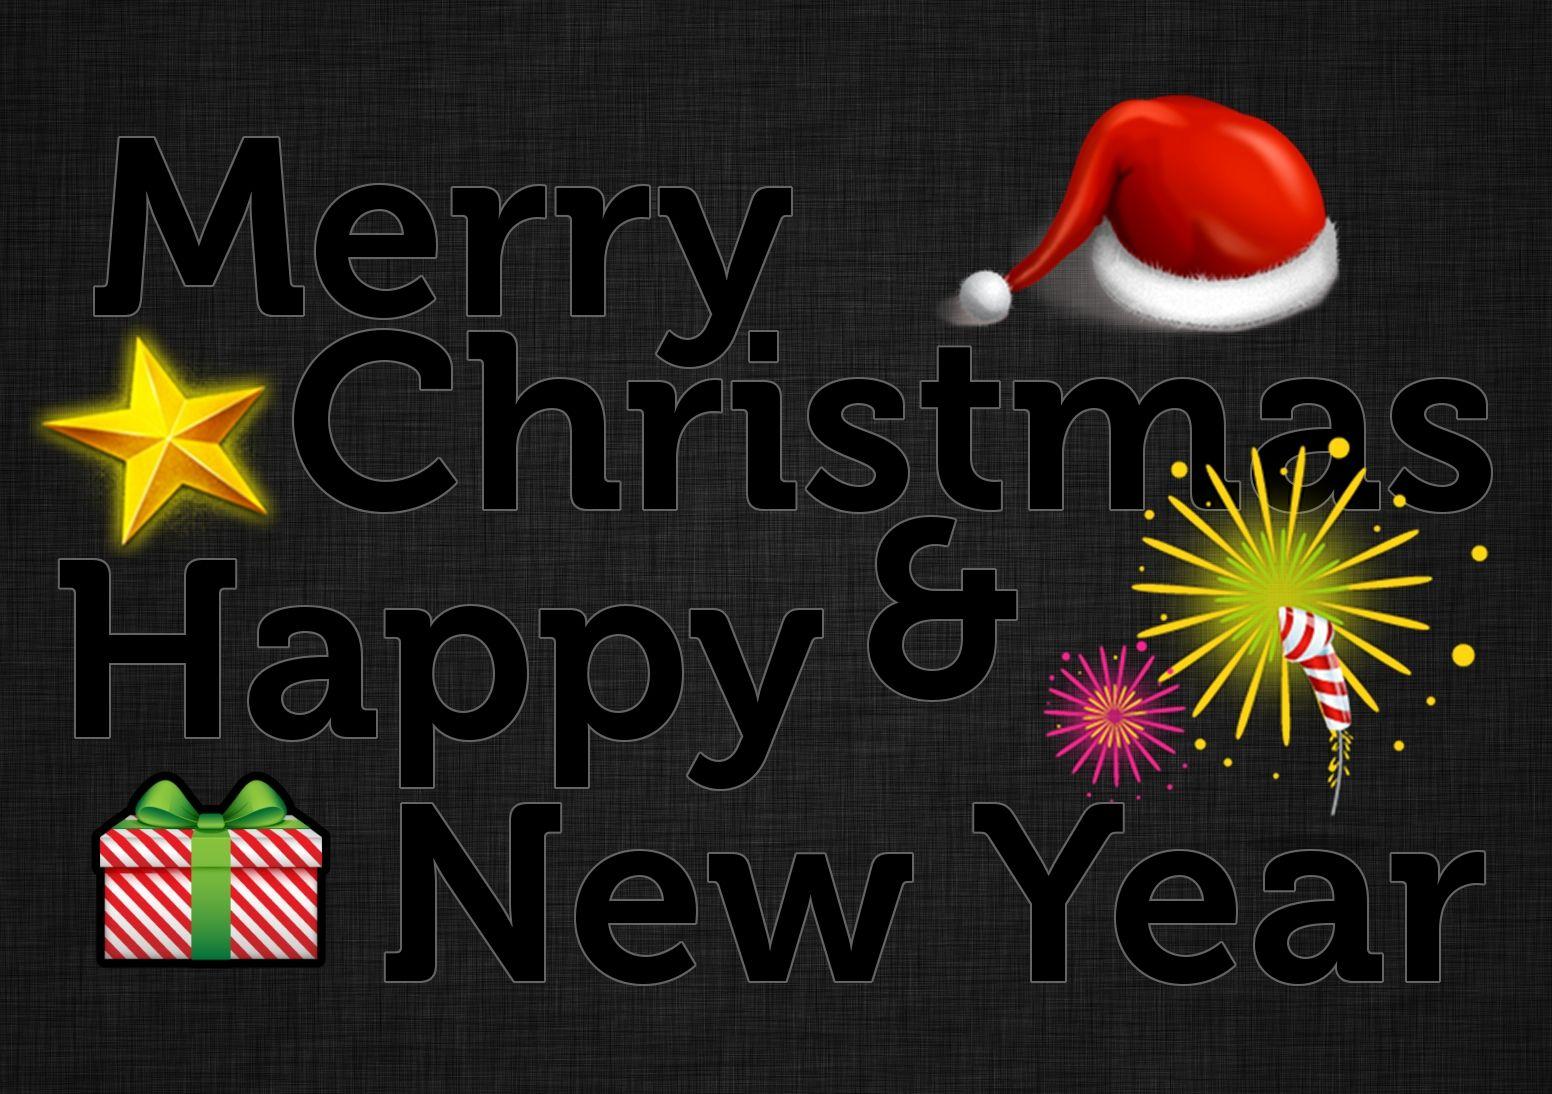 Merry Christmas & Happy New Year Wallpaper in GIMP. Scott